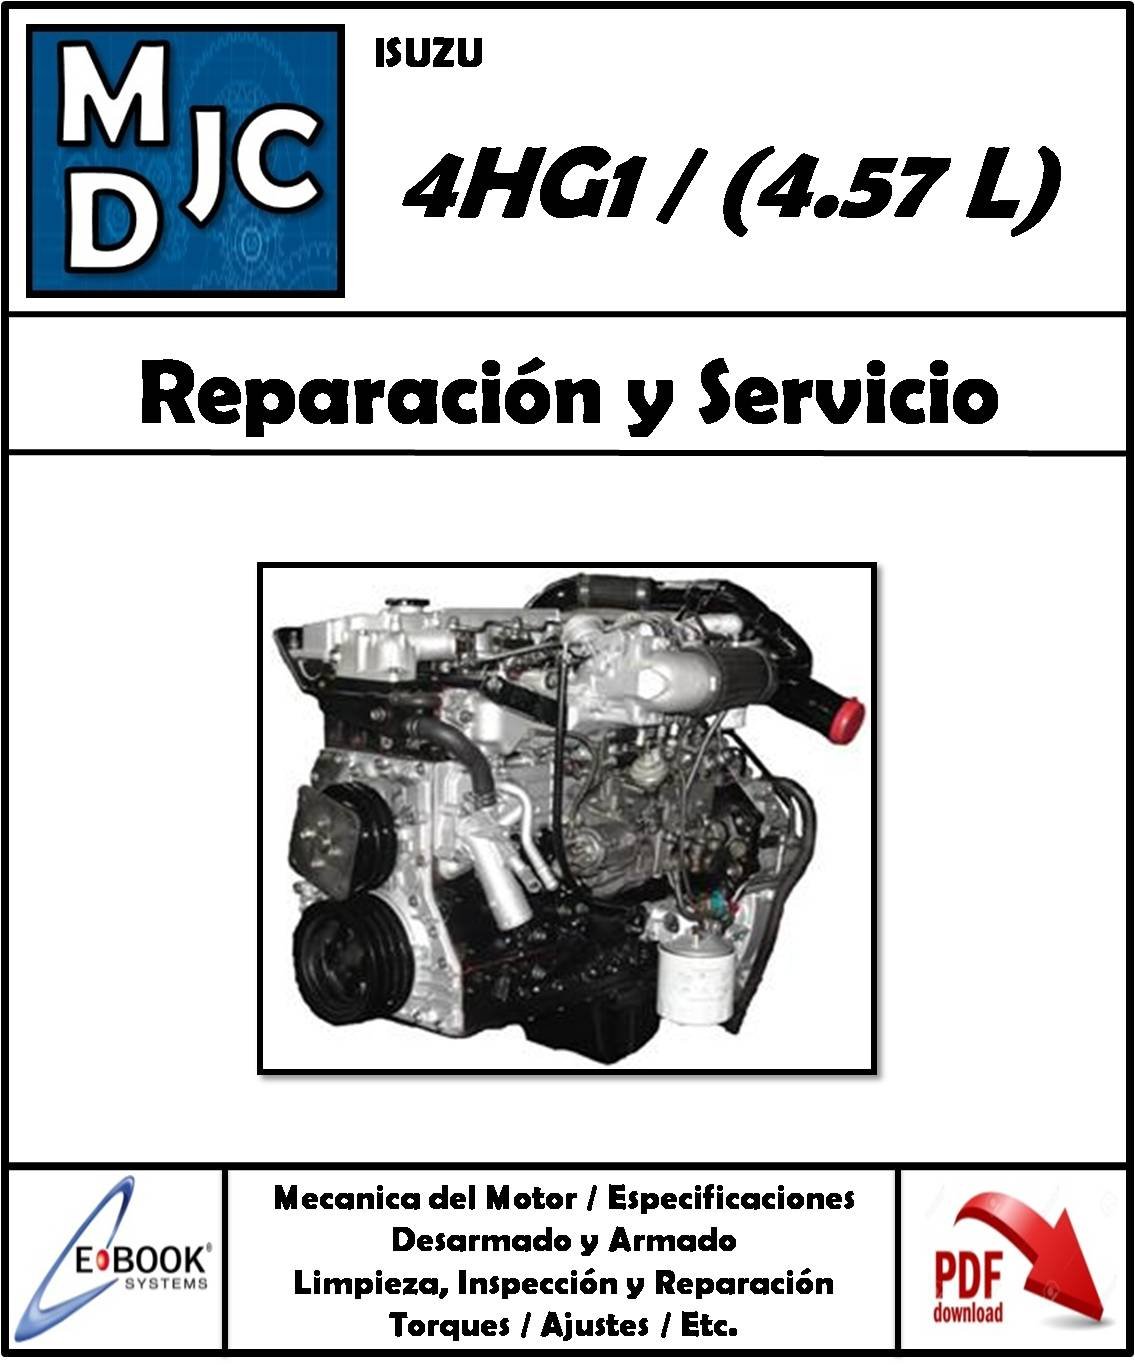 Isuzu  4HG1  Motor  4.57 L